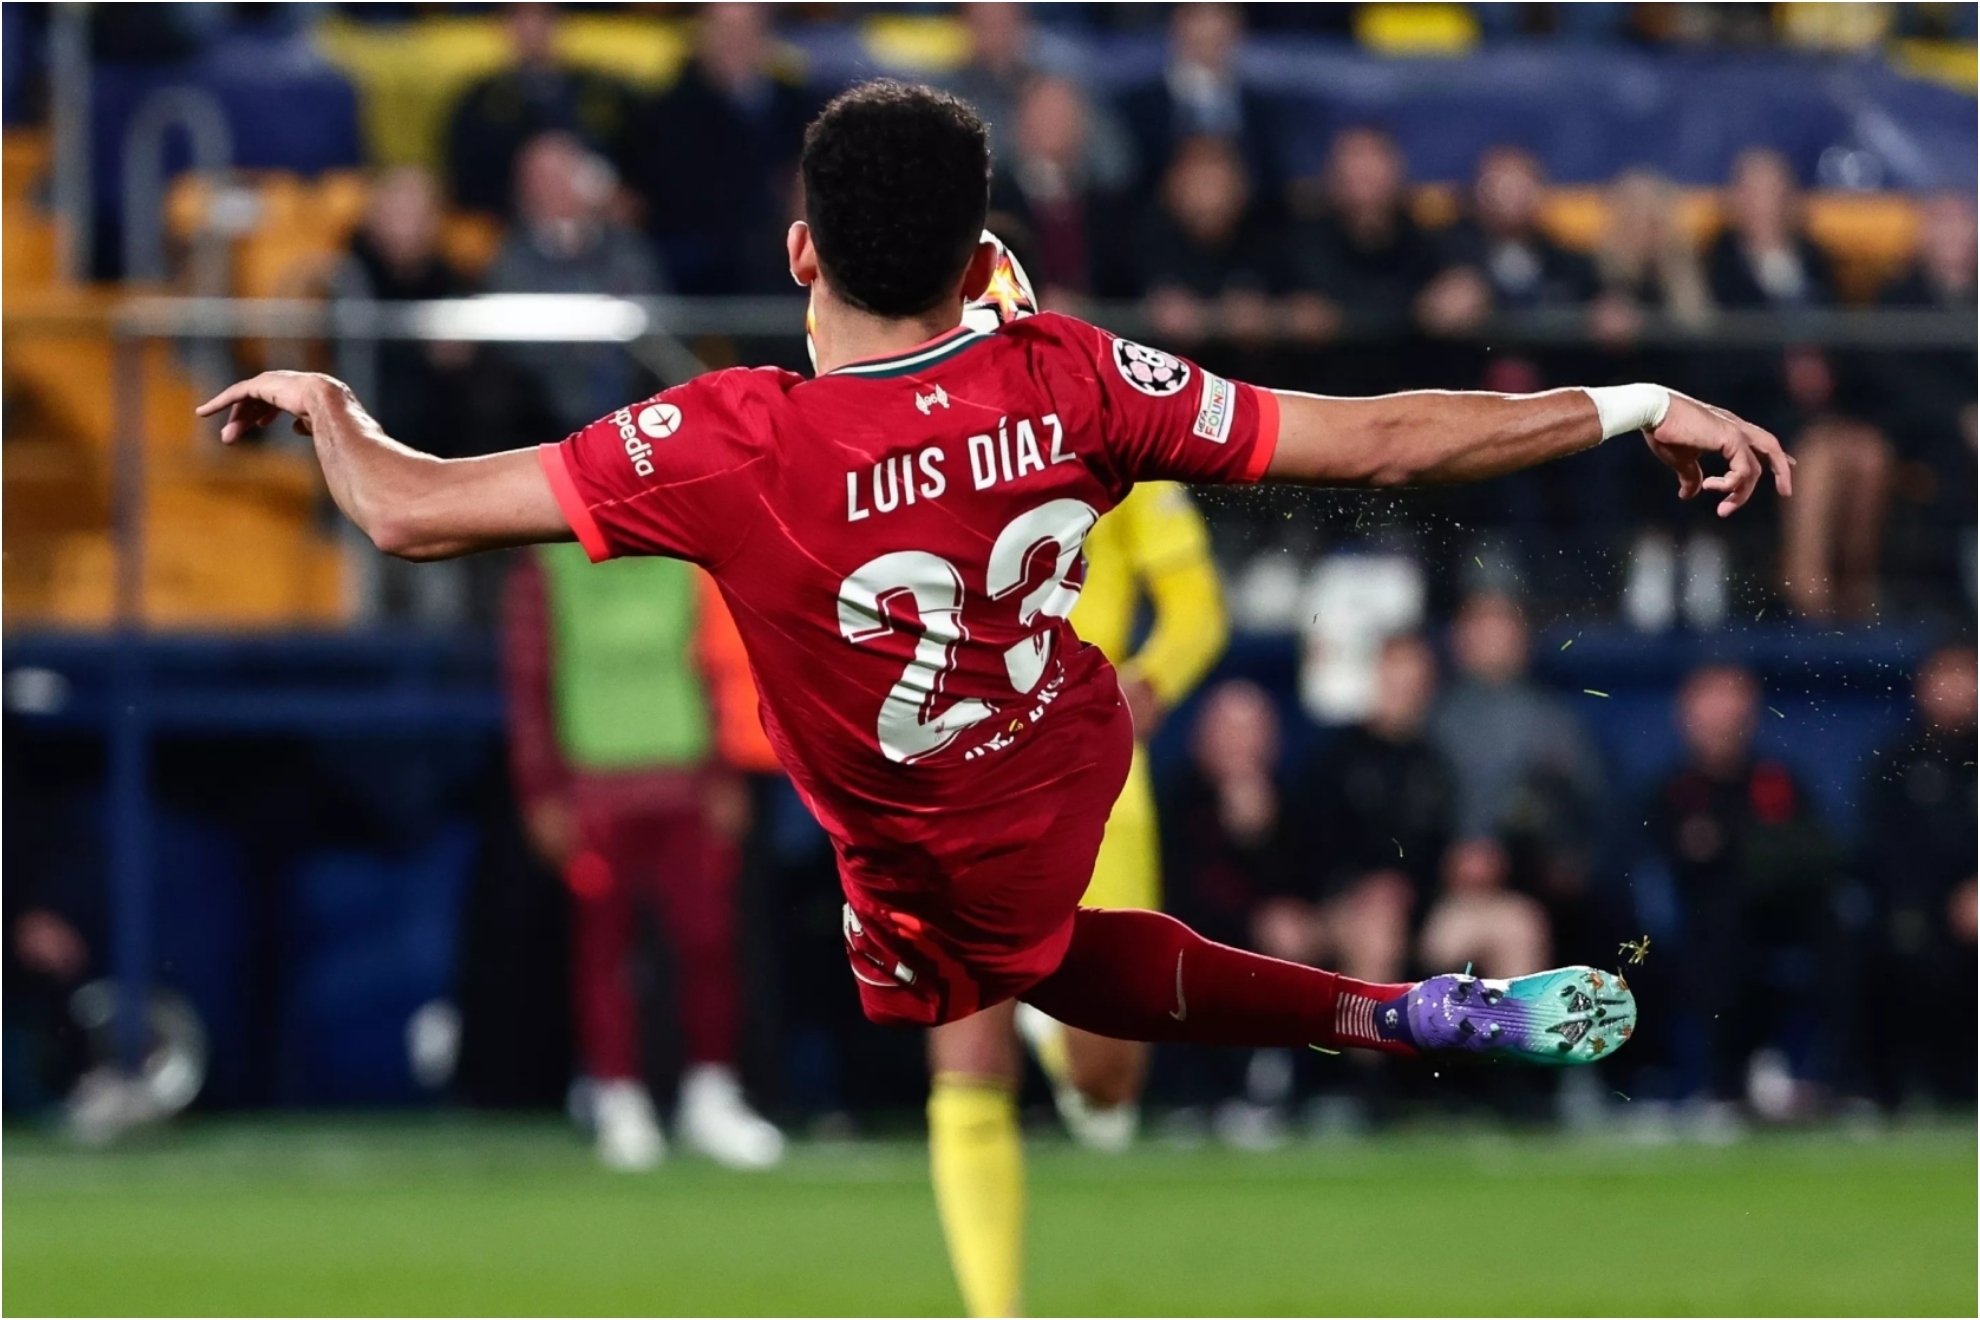 Lis Díaz intenta un remate de tijera en un partido del Liverpool.